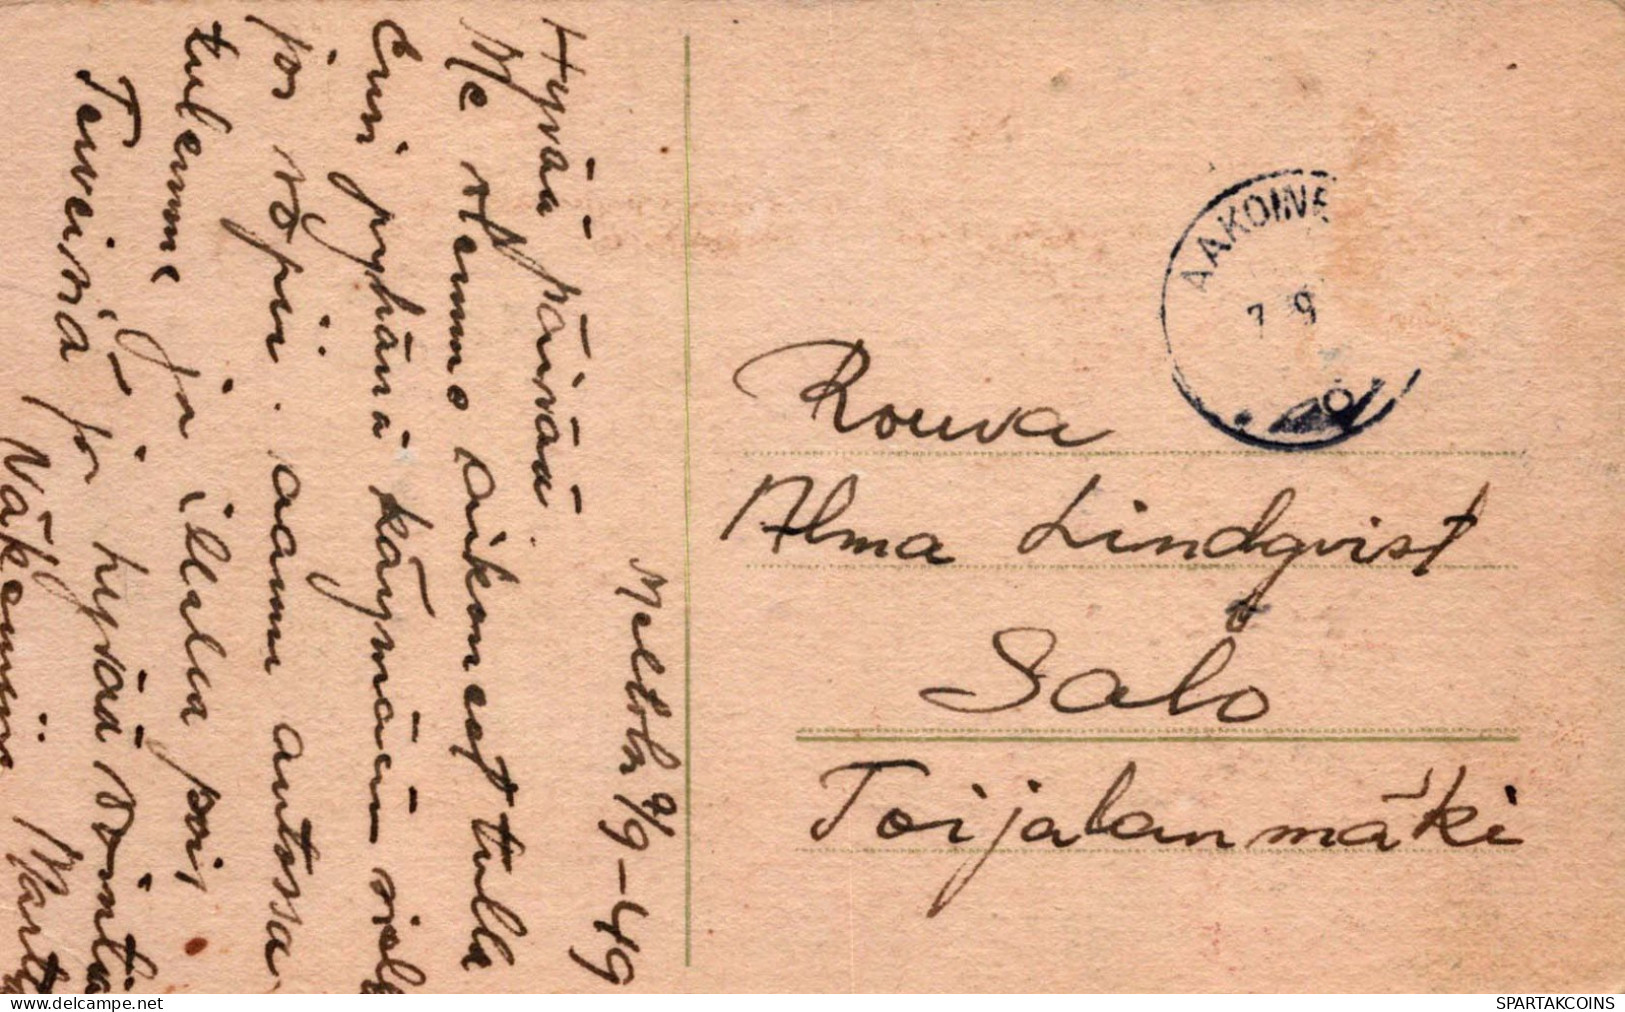 FLORES Vintage Tarjeta Postal CPA #PKE731.ES - Blumen